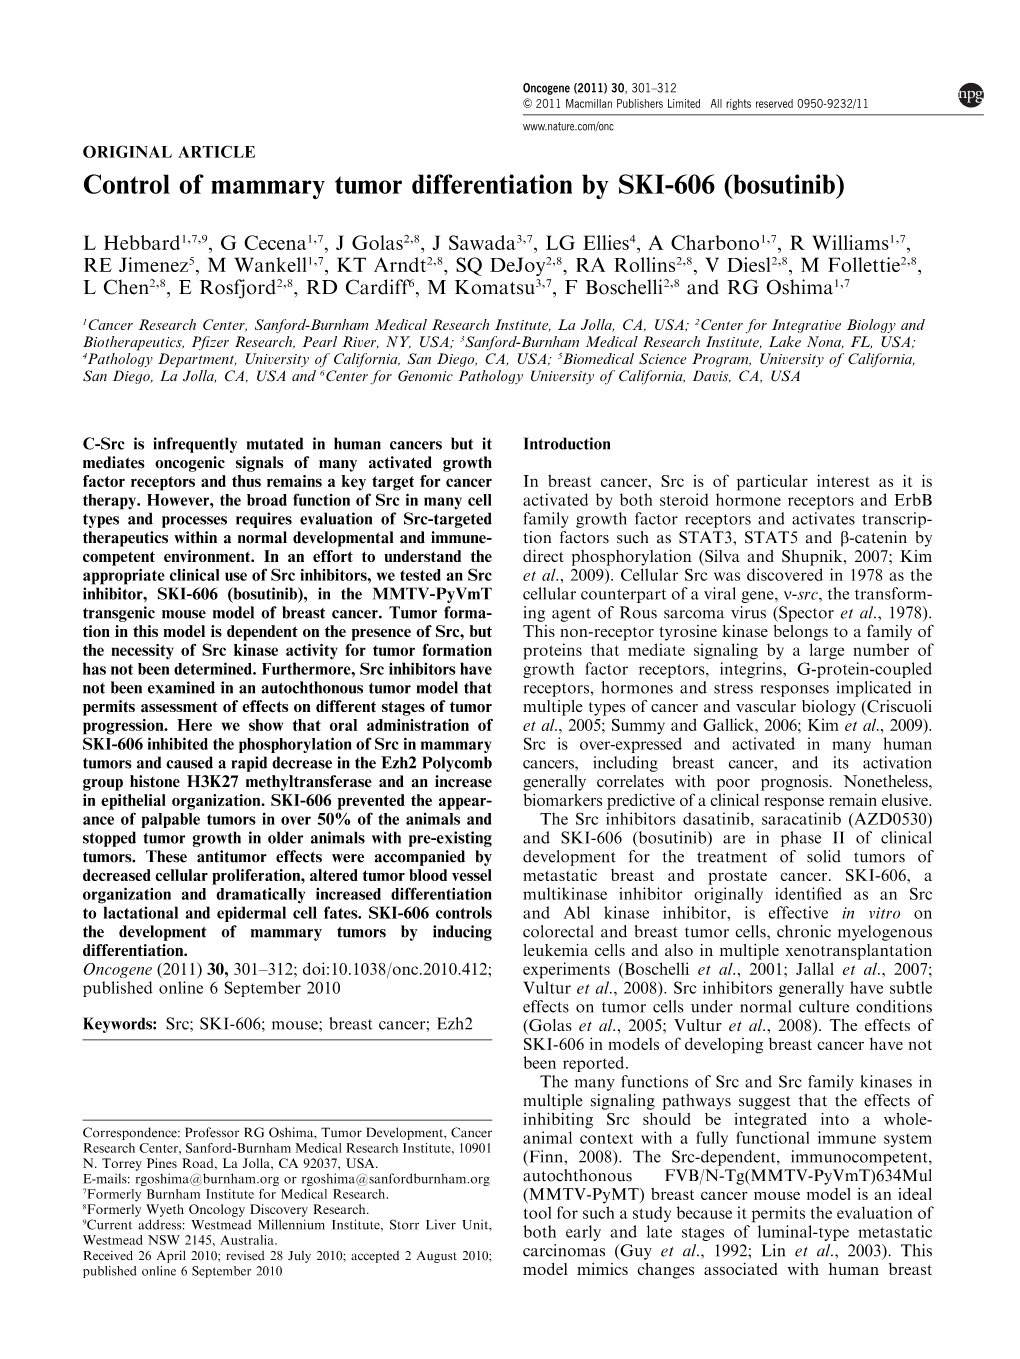 Control of Mammary Tumor Differentiation by SKI-606 (Bosutinib)